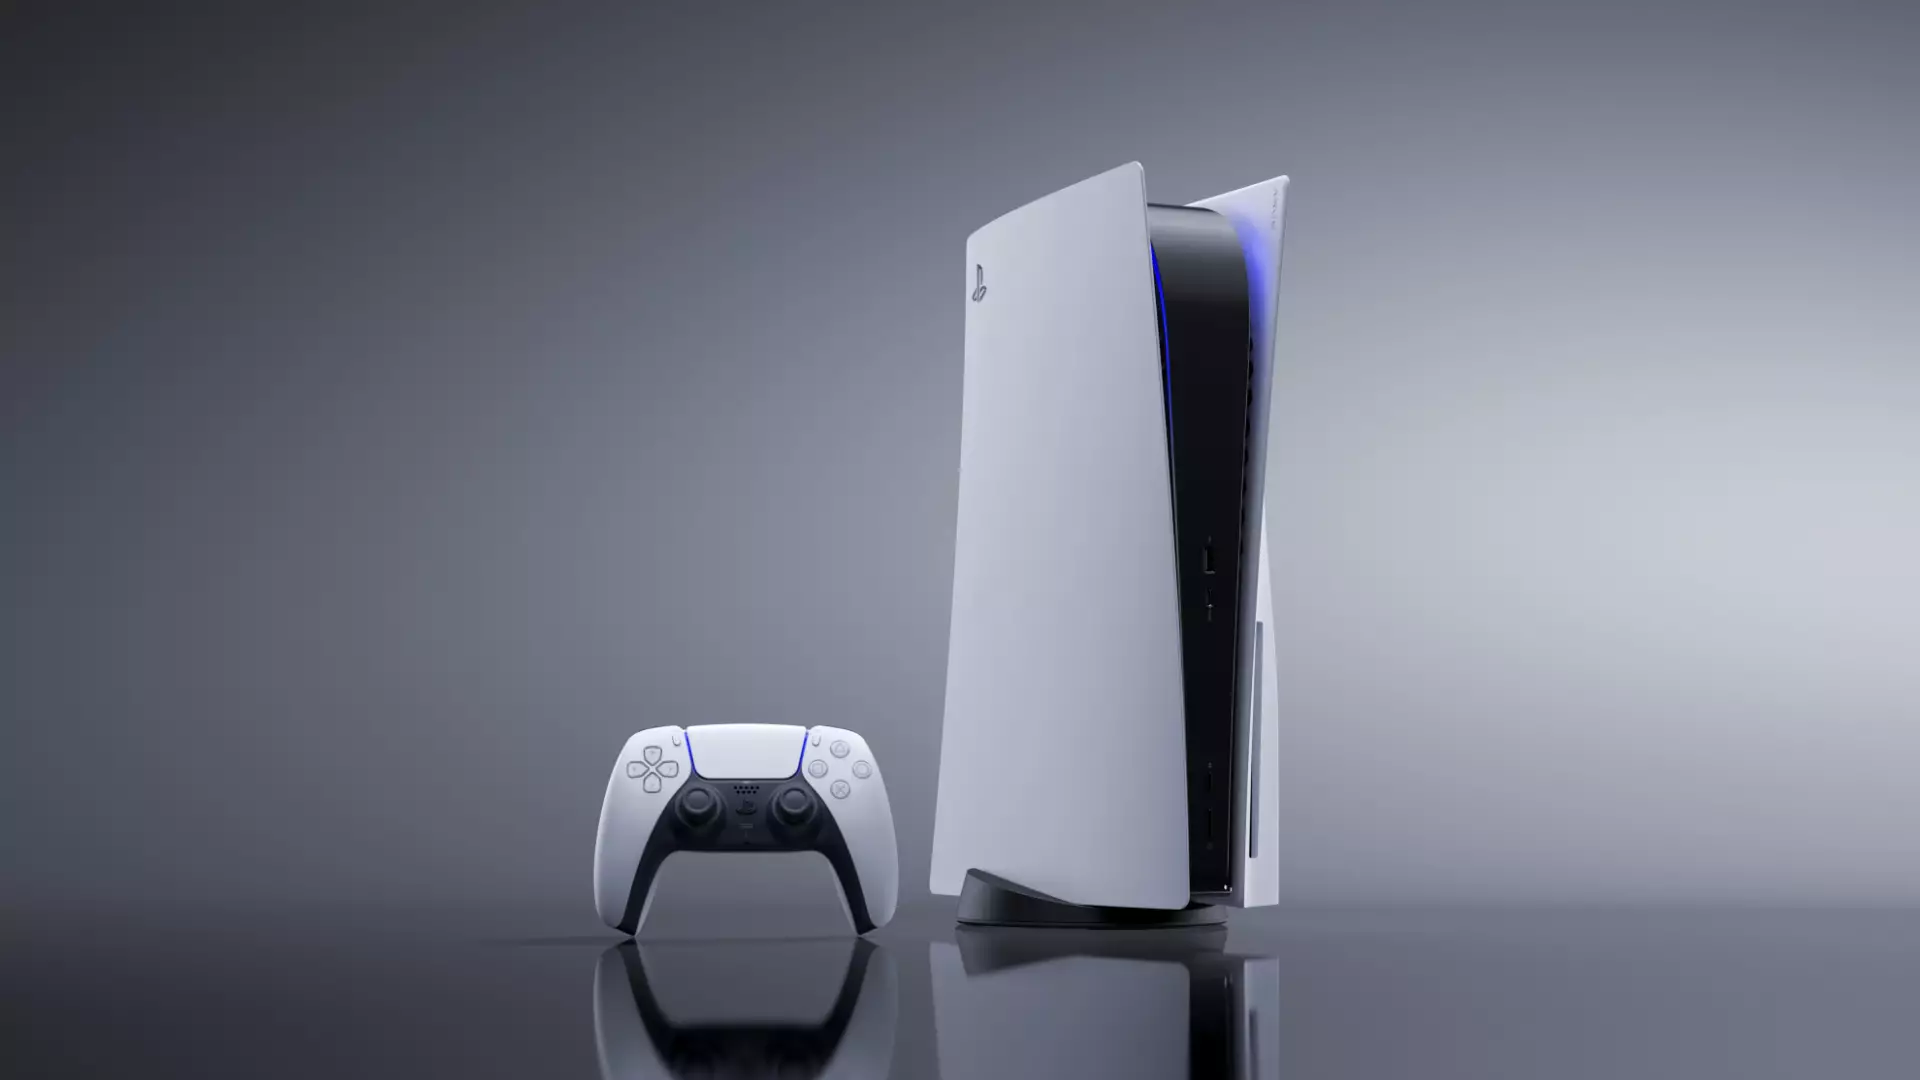  PlayStation®5 Digital Edition (slim) and Disc Drive